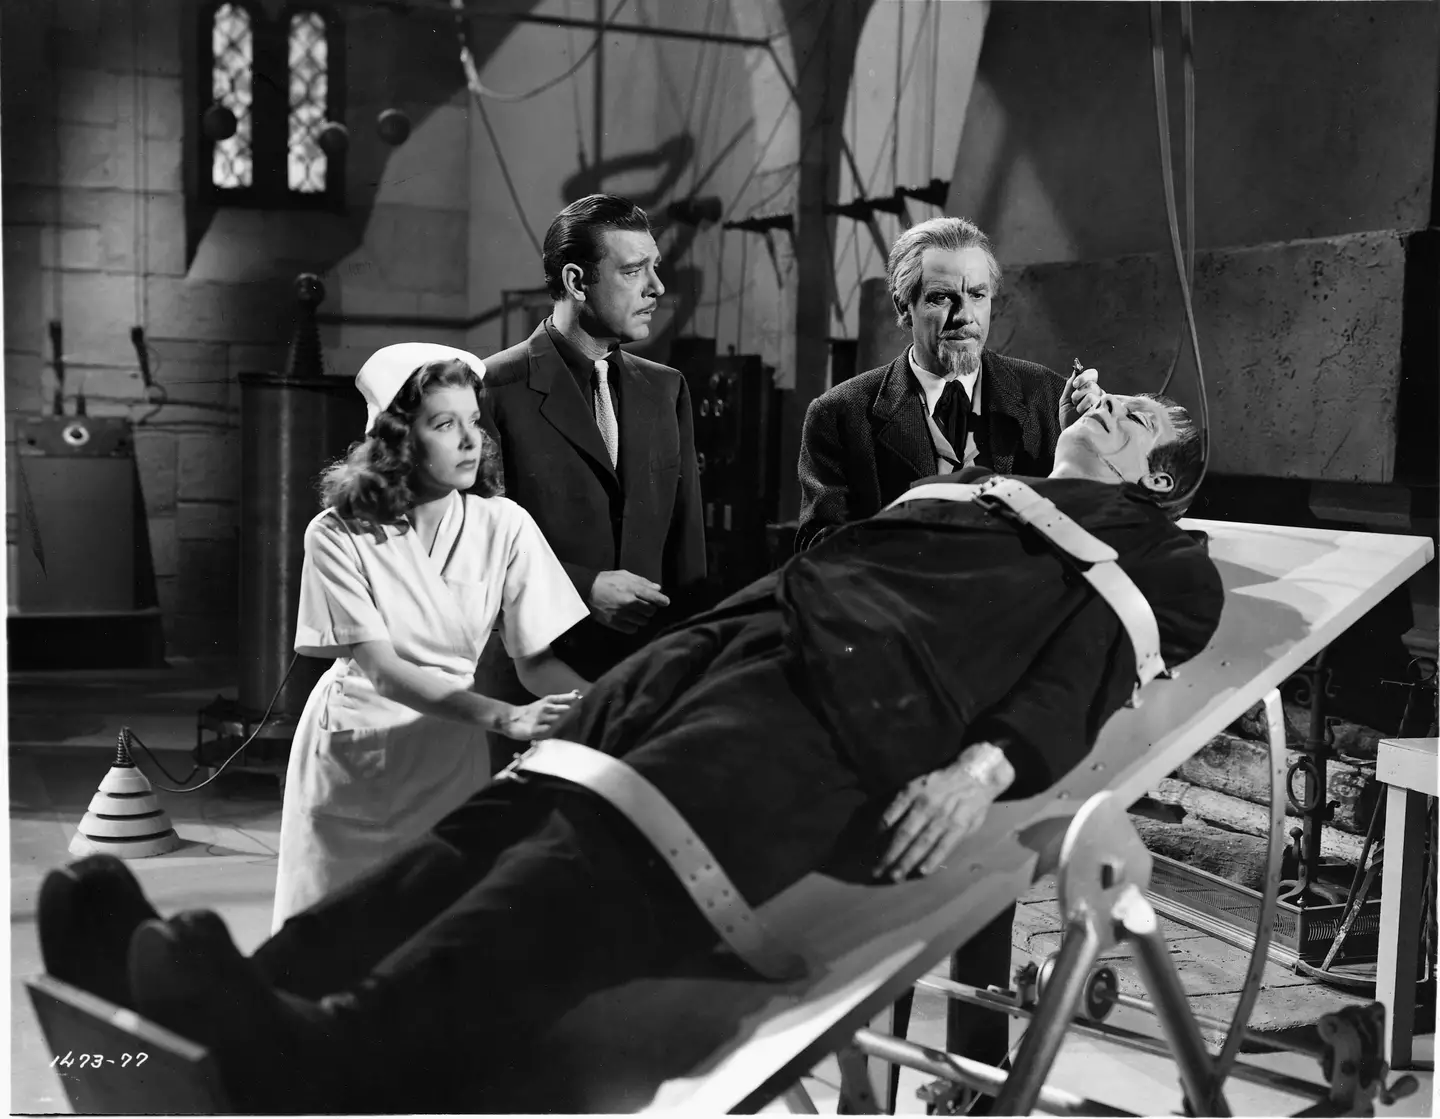 Still from the film House of Frankenstein, released in 1944.